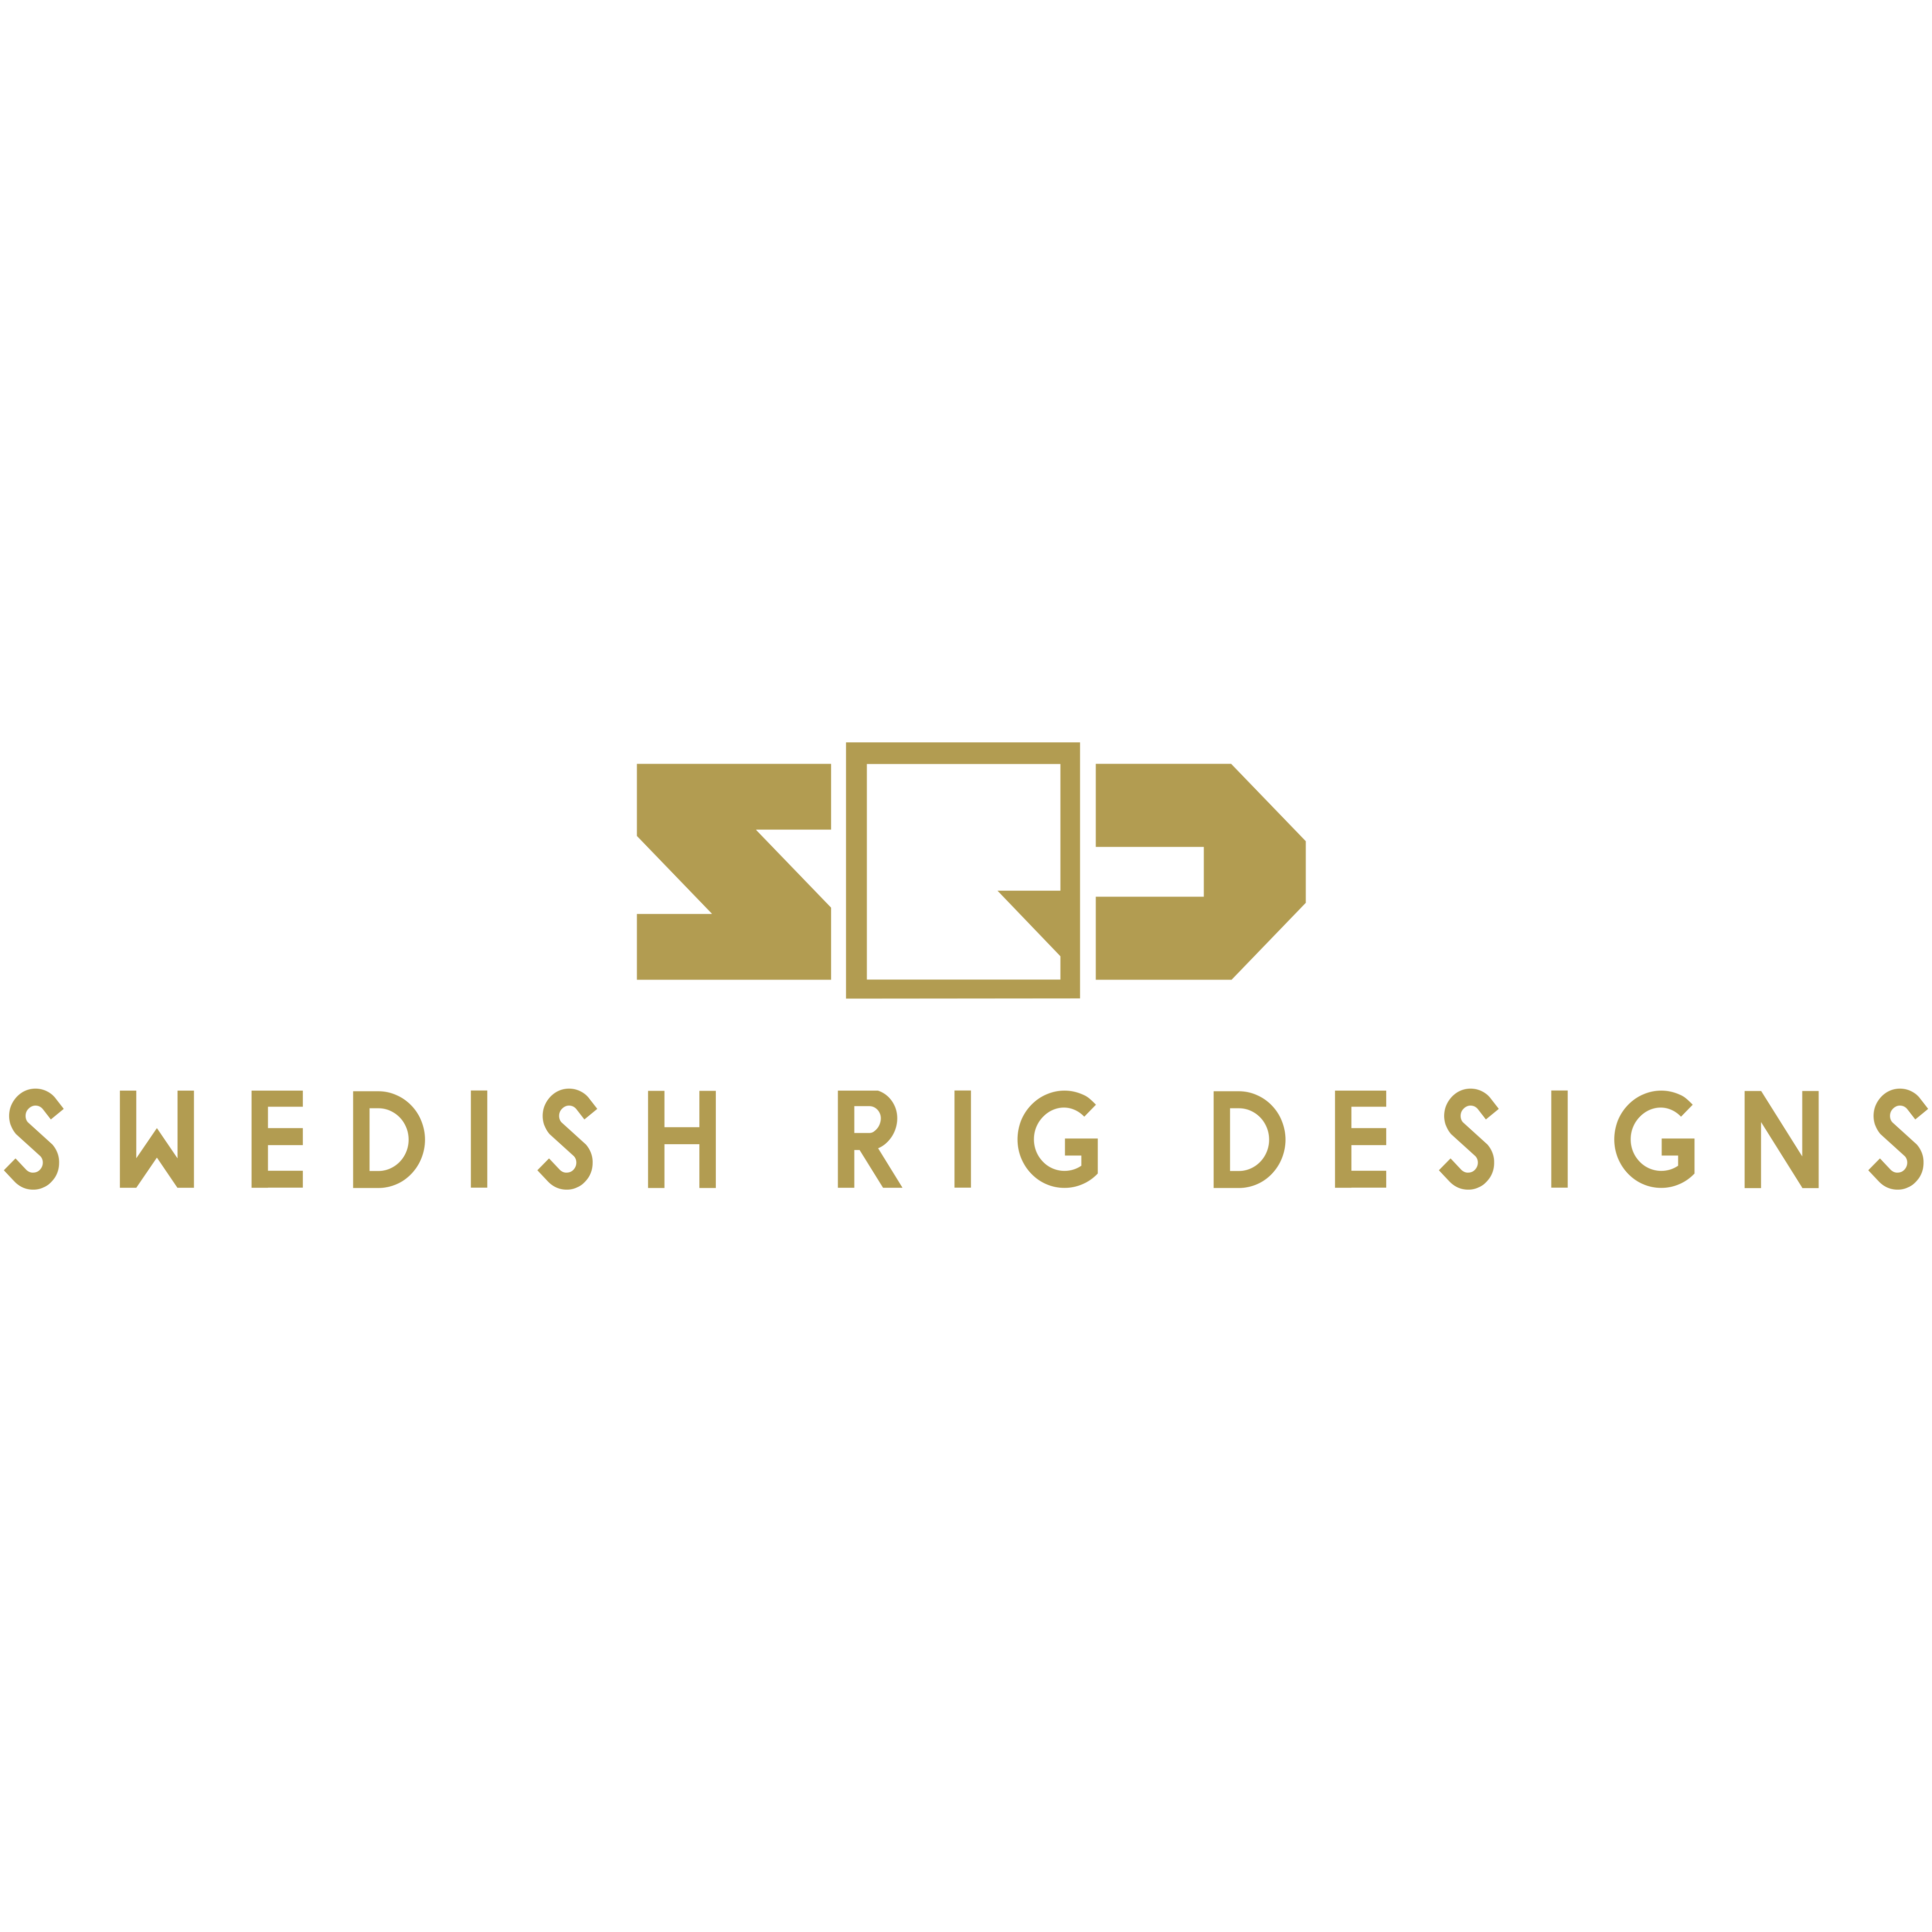 Swedish Rig Designs